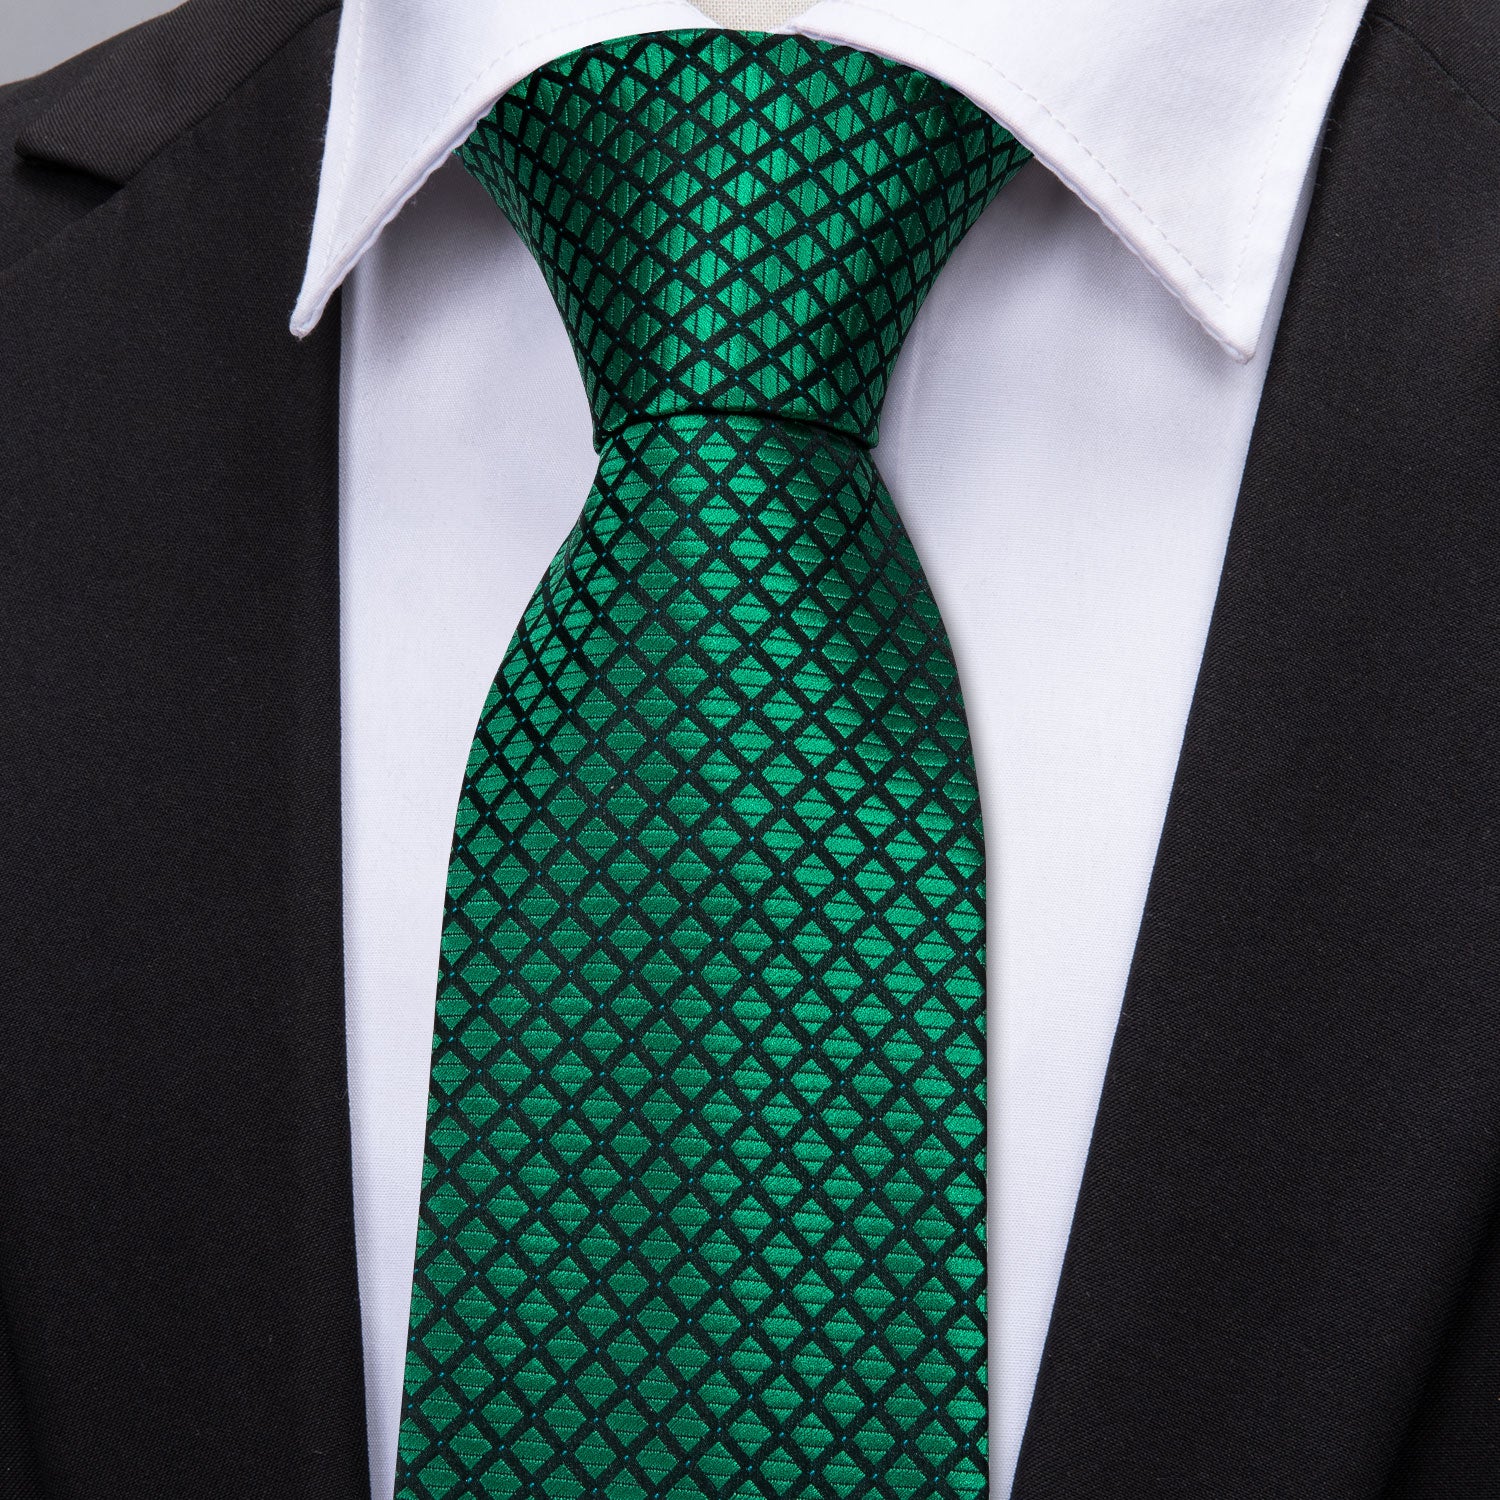 Barry Wang Green Plaid Tie Pocket Square Cufflinks Set